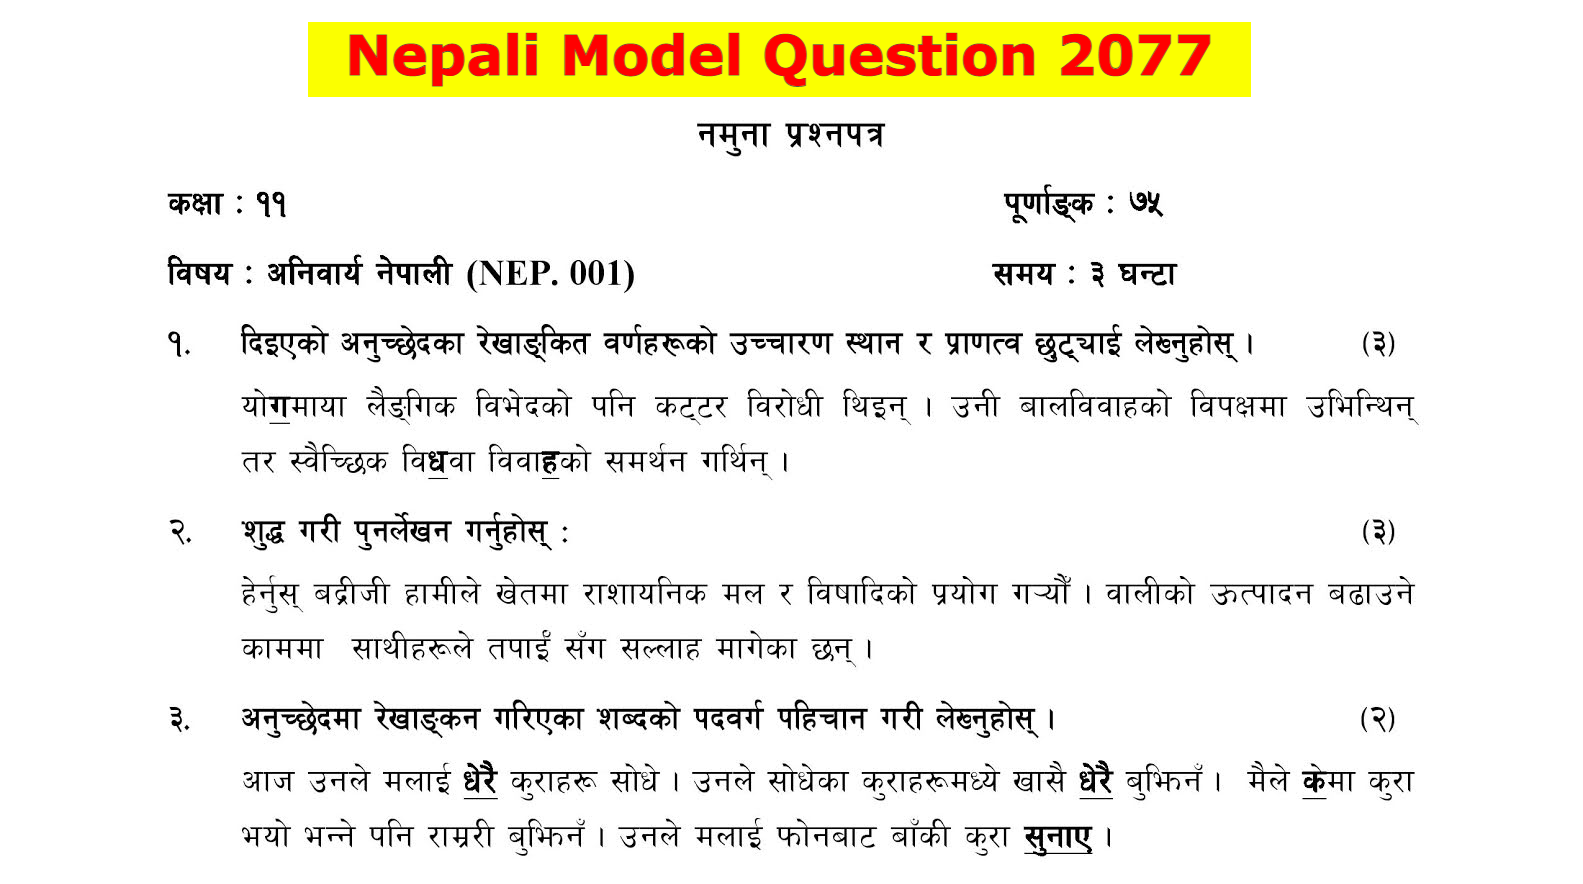 nepali model question pdf